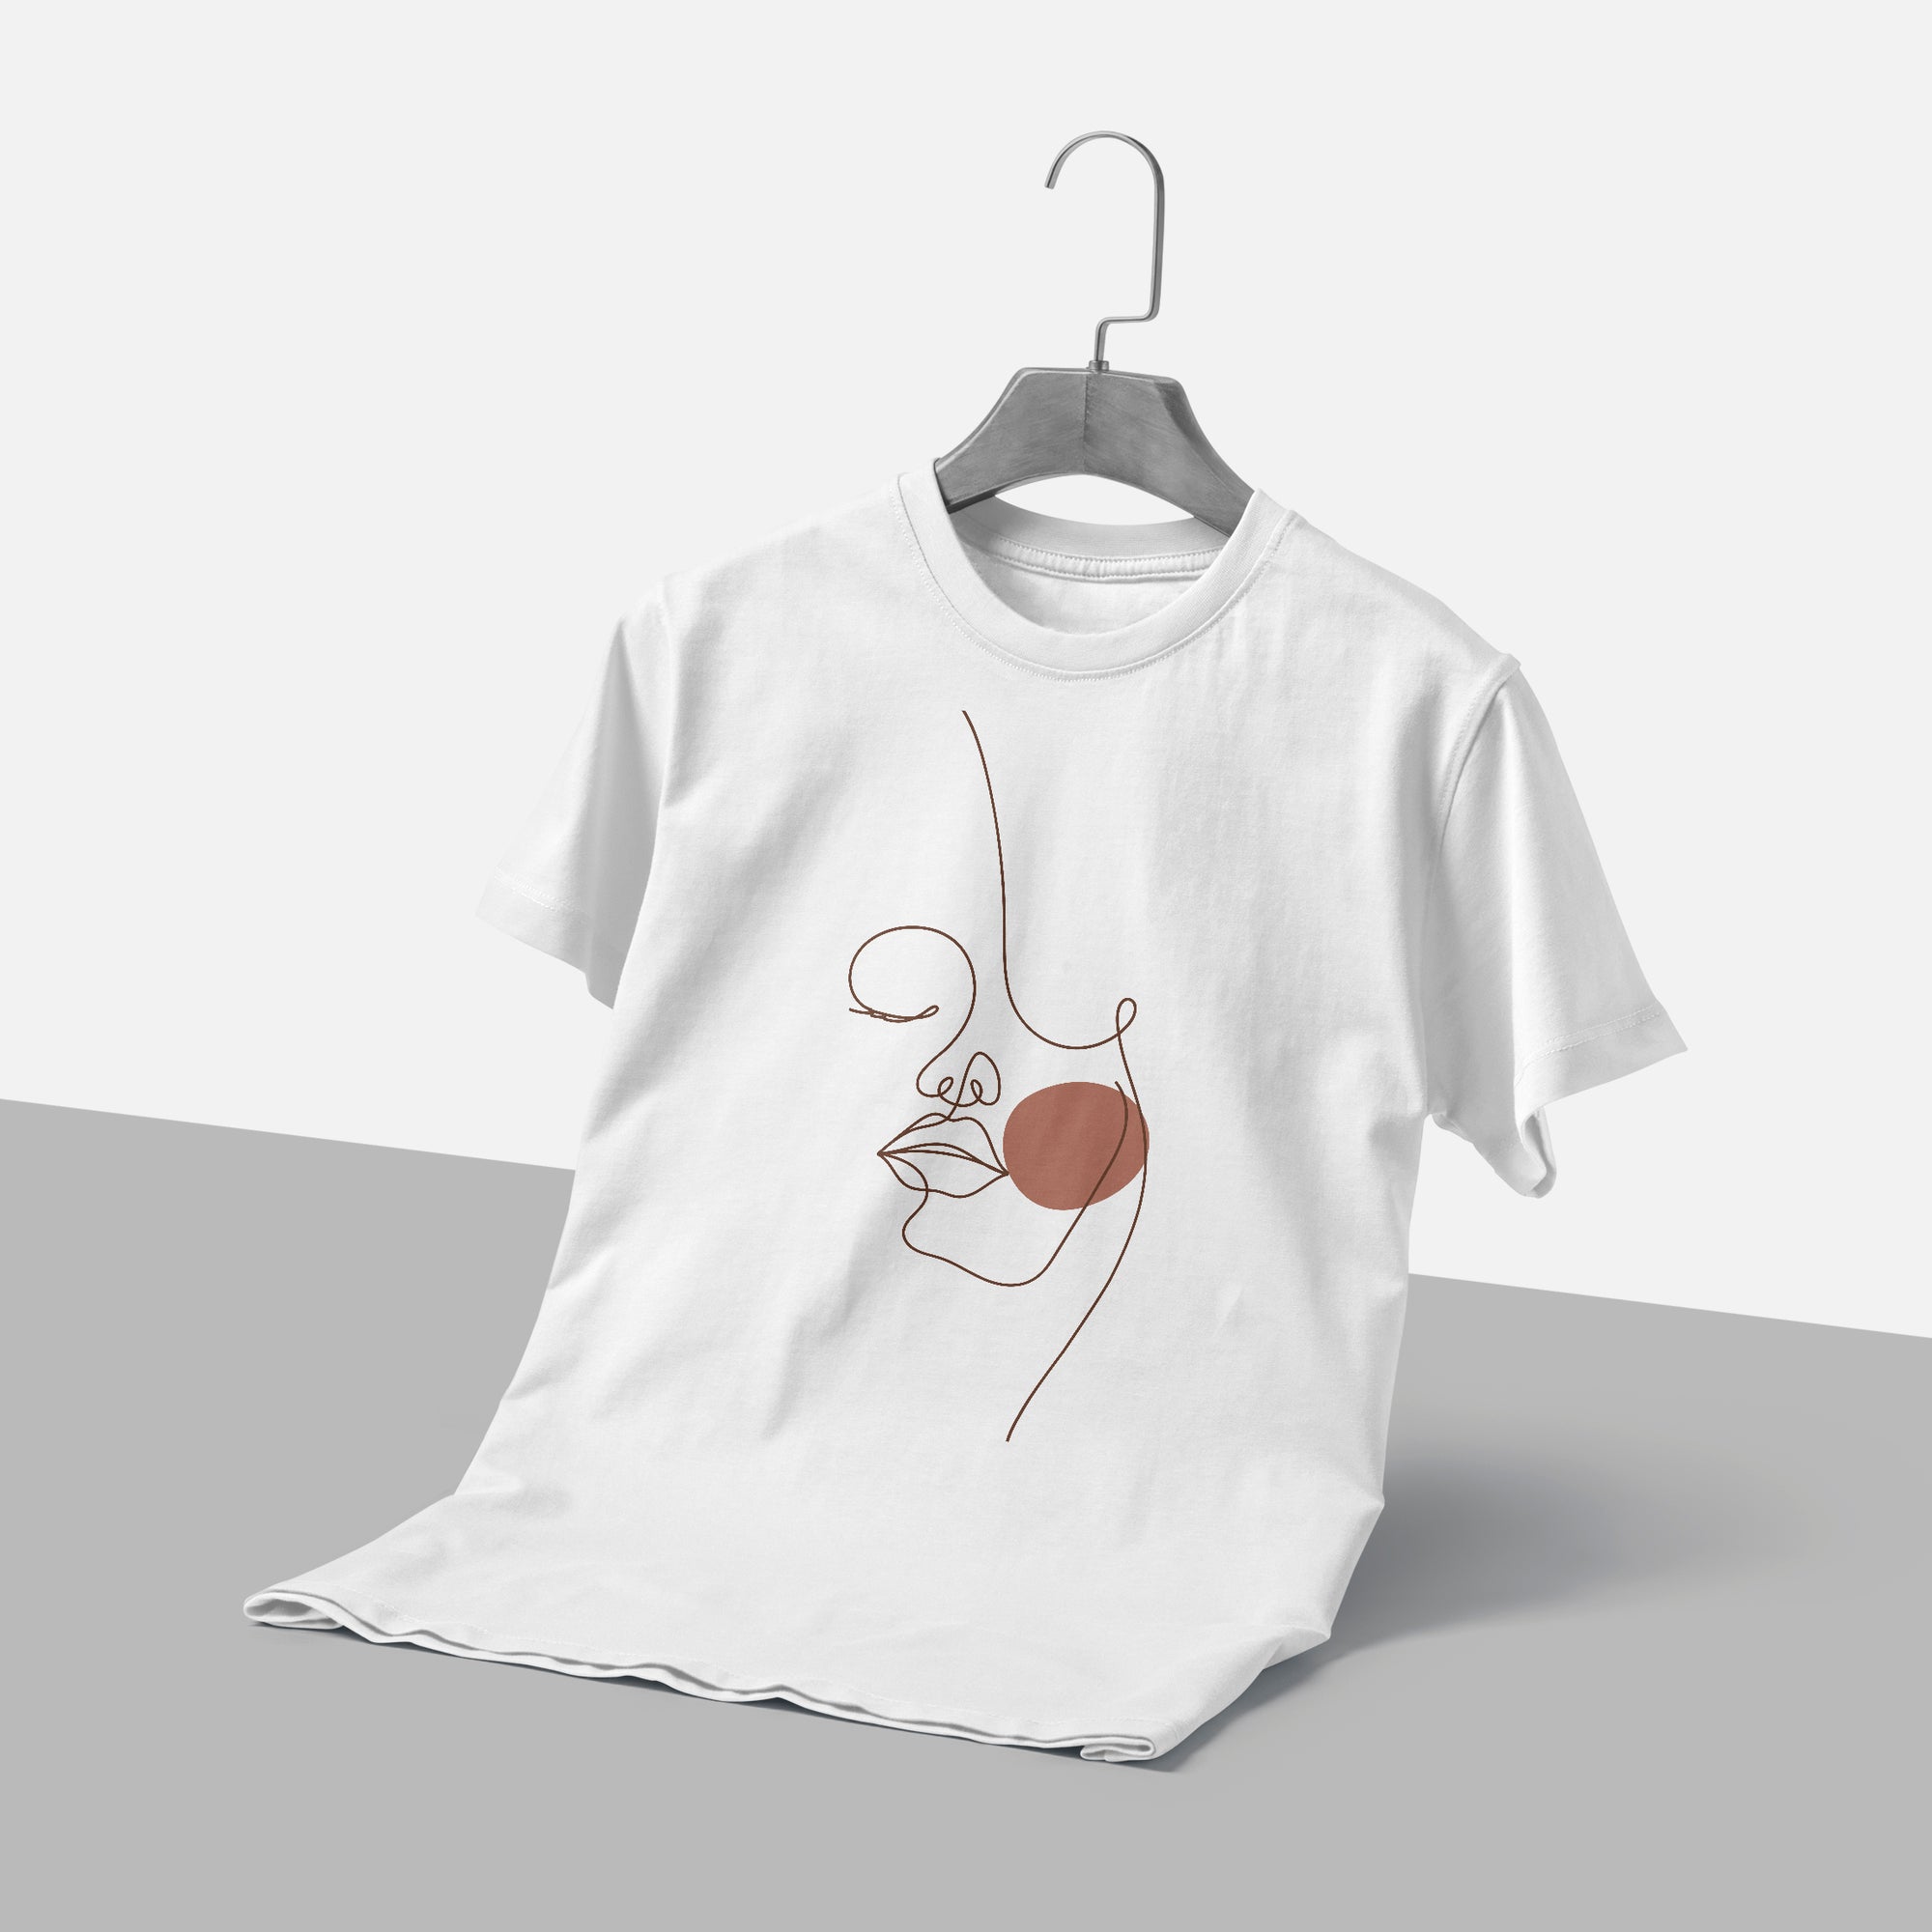 Line Art of Graphic Design T-Shirt